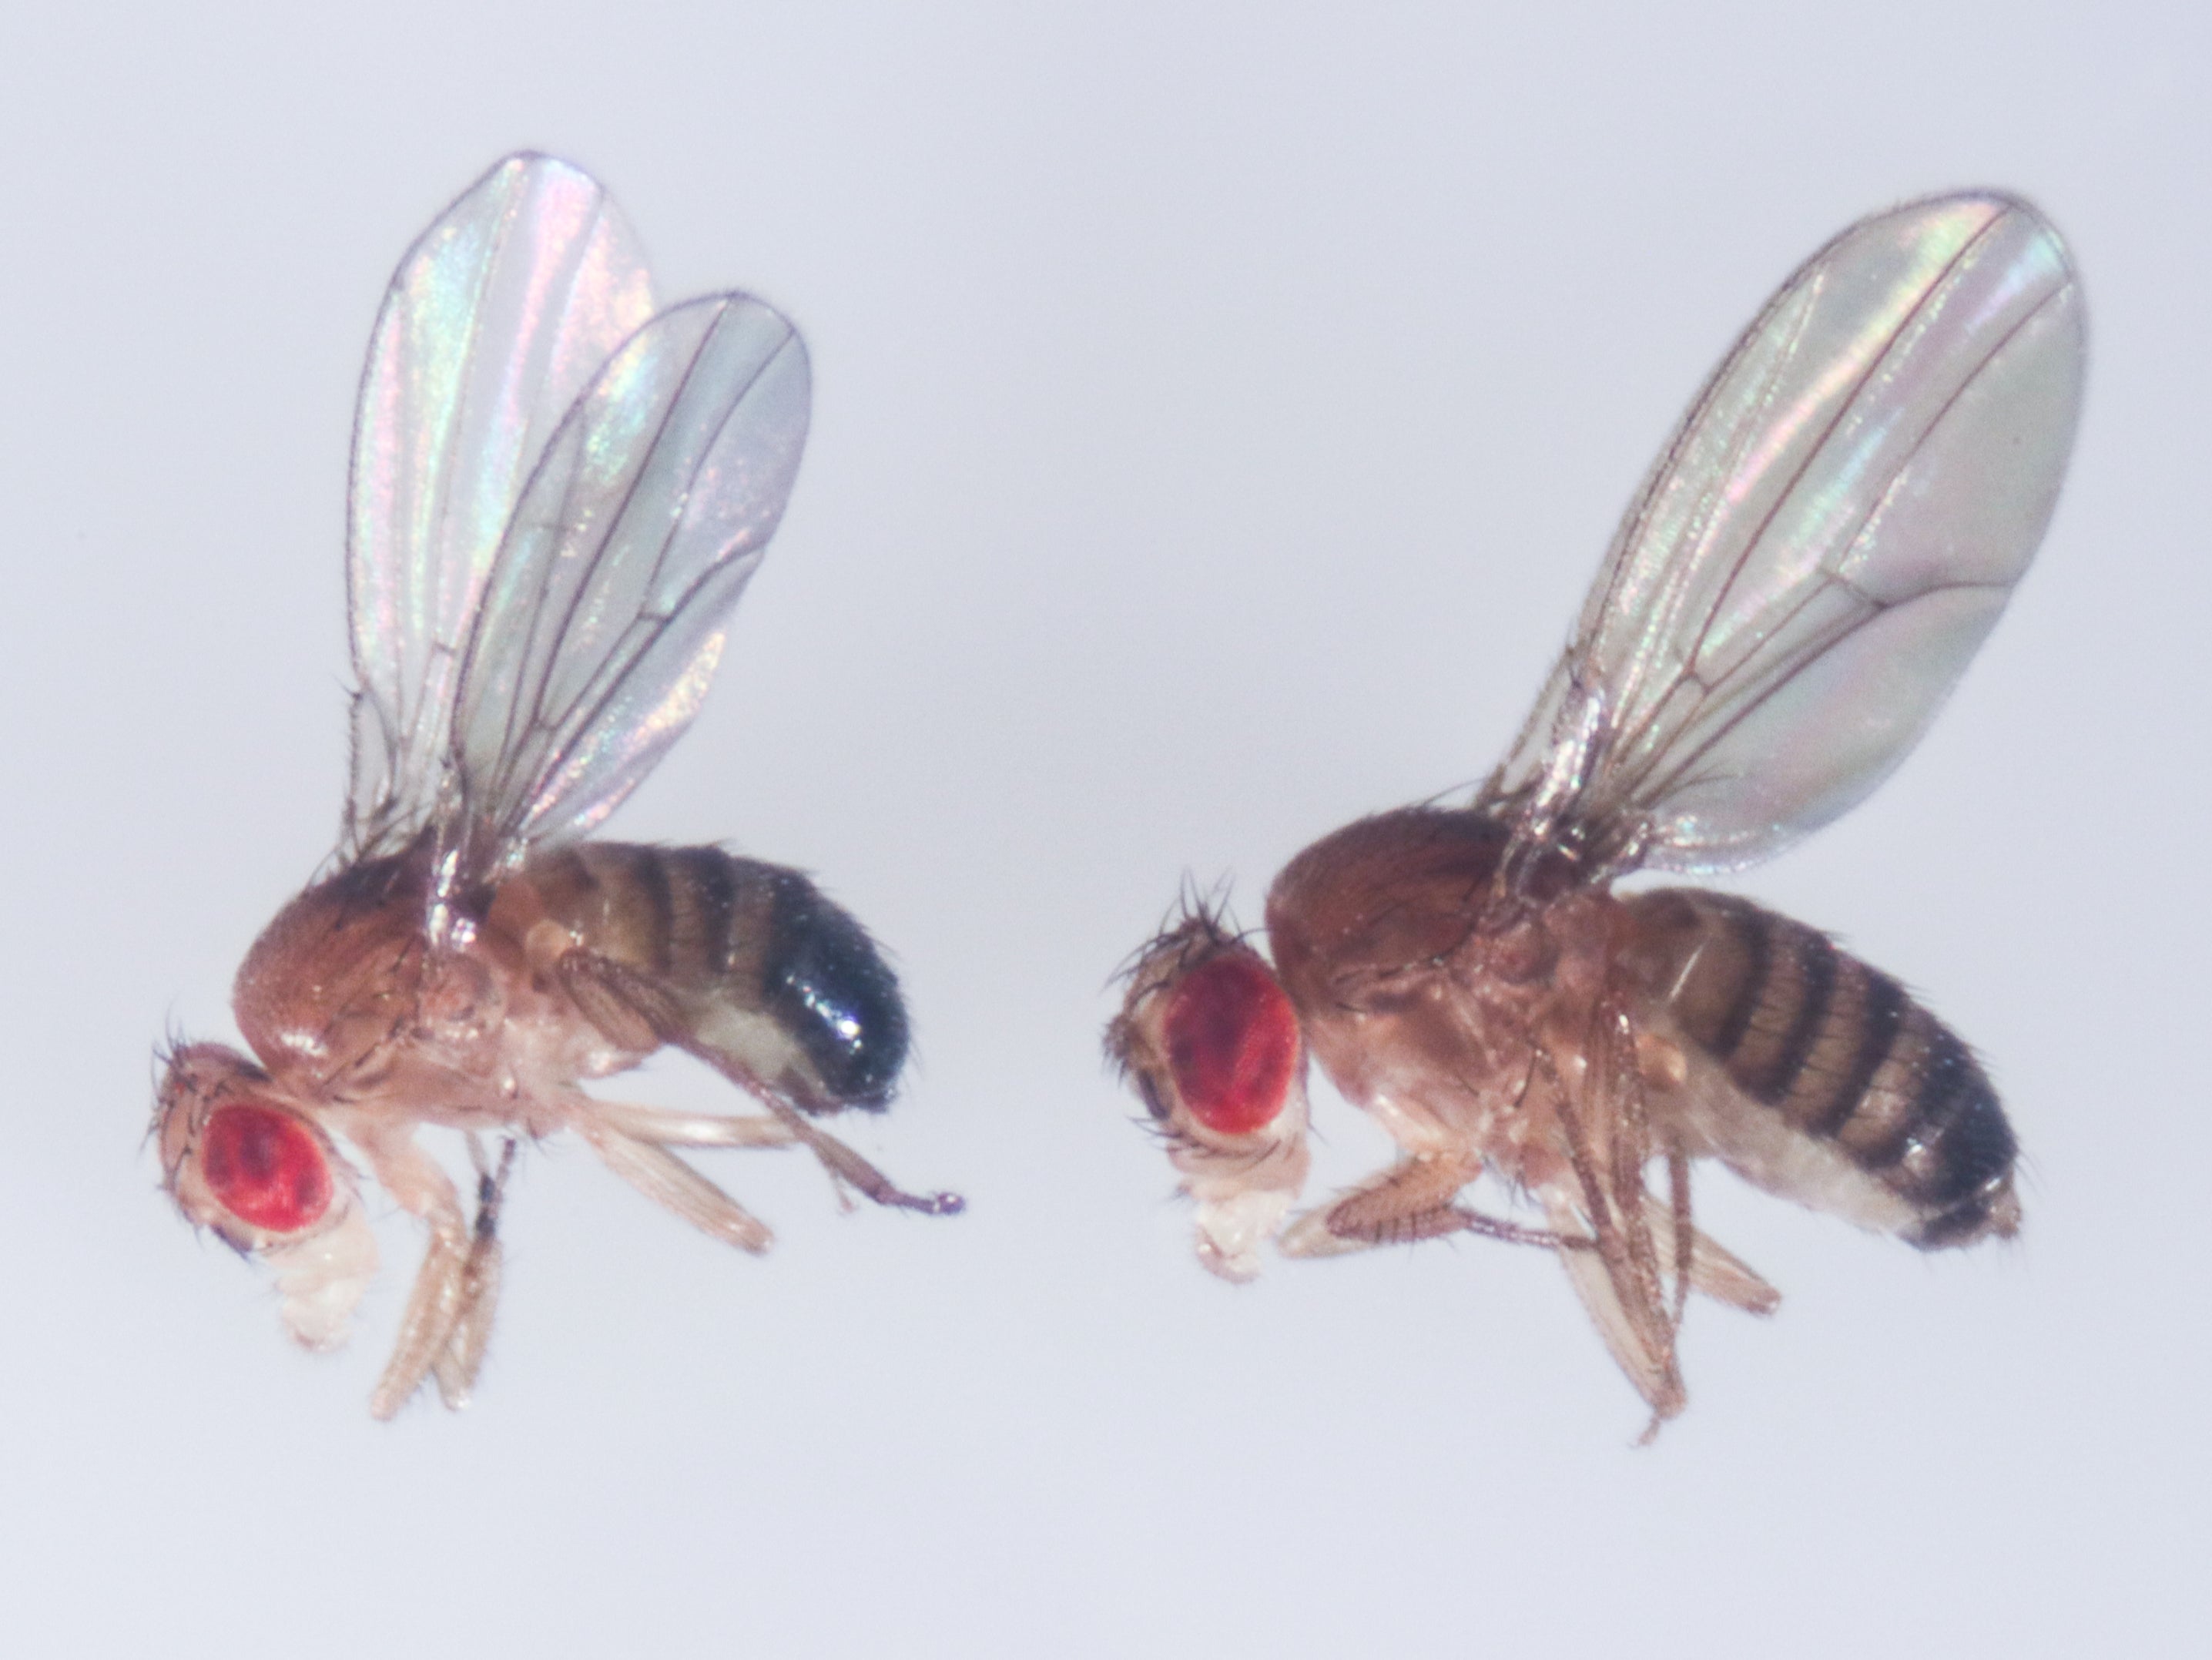 Drosophila melanogaster, or the common fruit fly, holds many secrets about biology